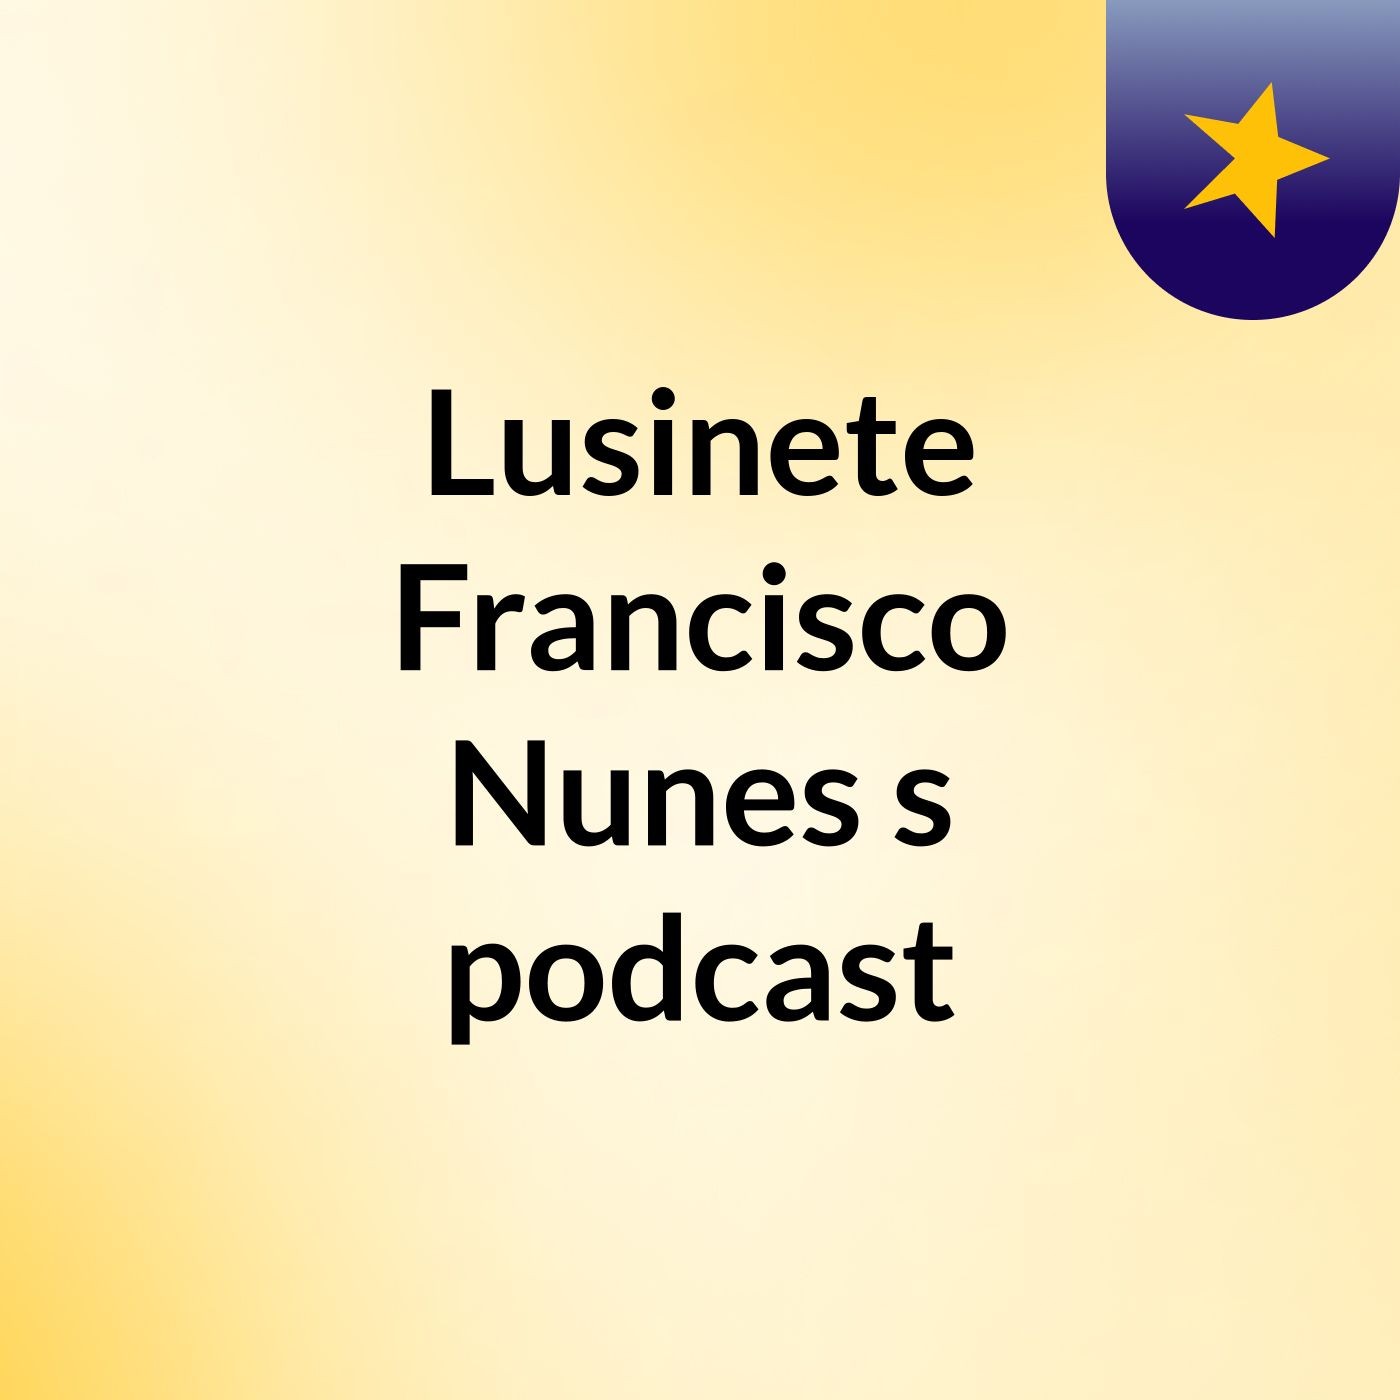 Lusinete Francisco Nunes's podcast